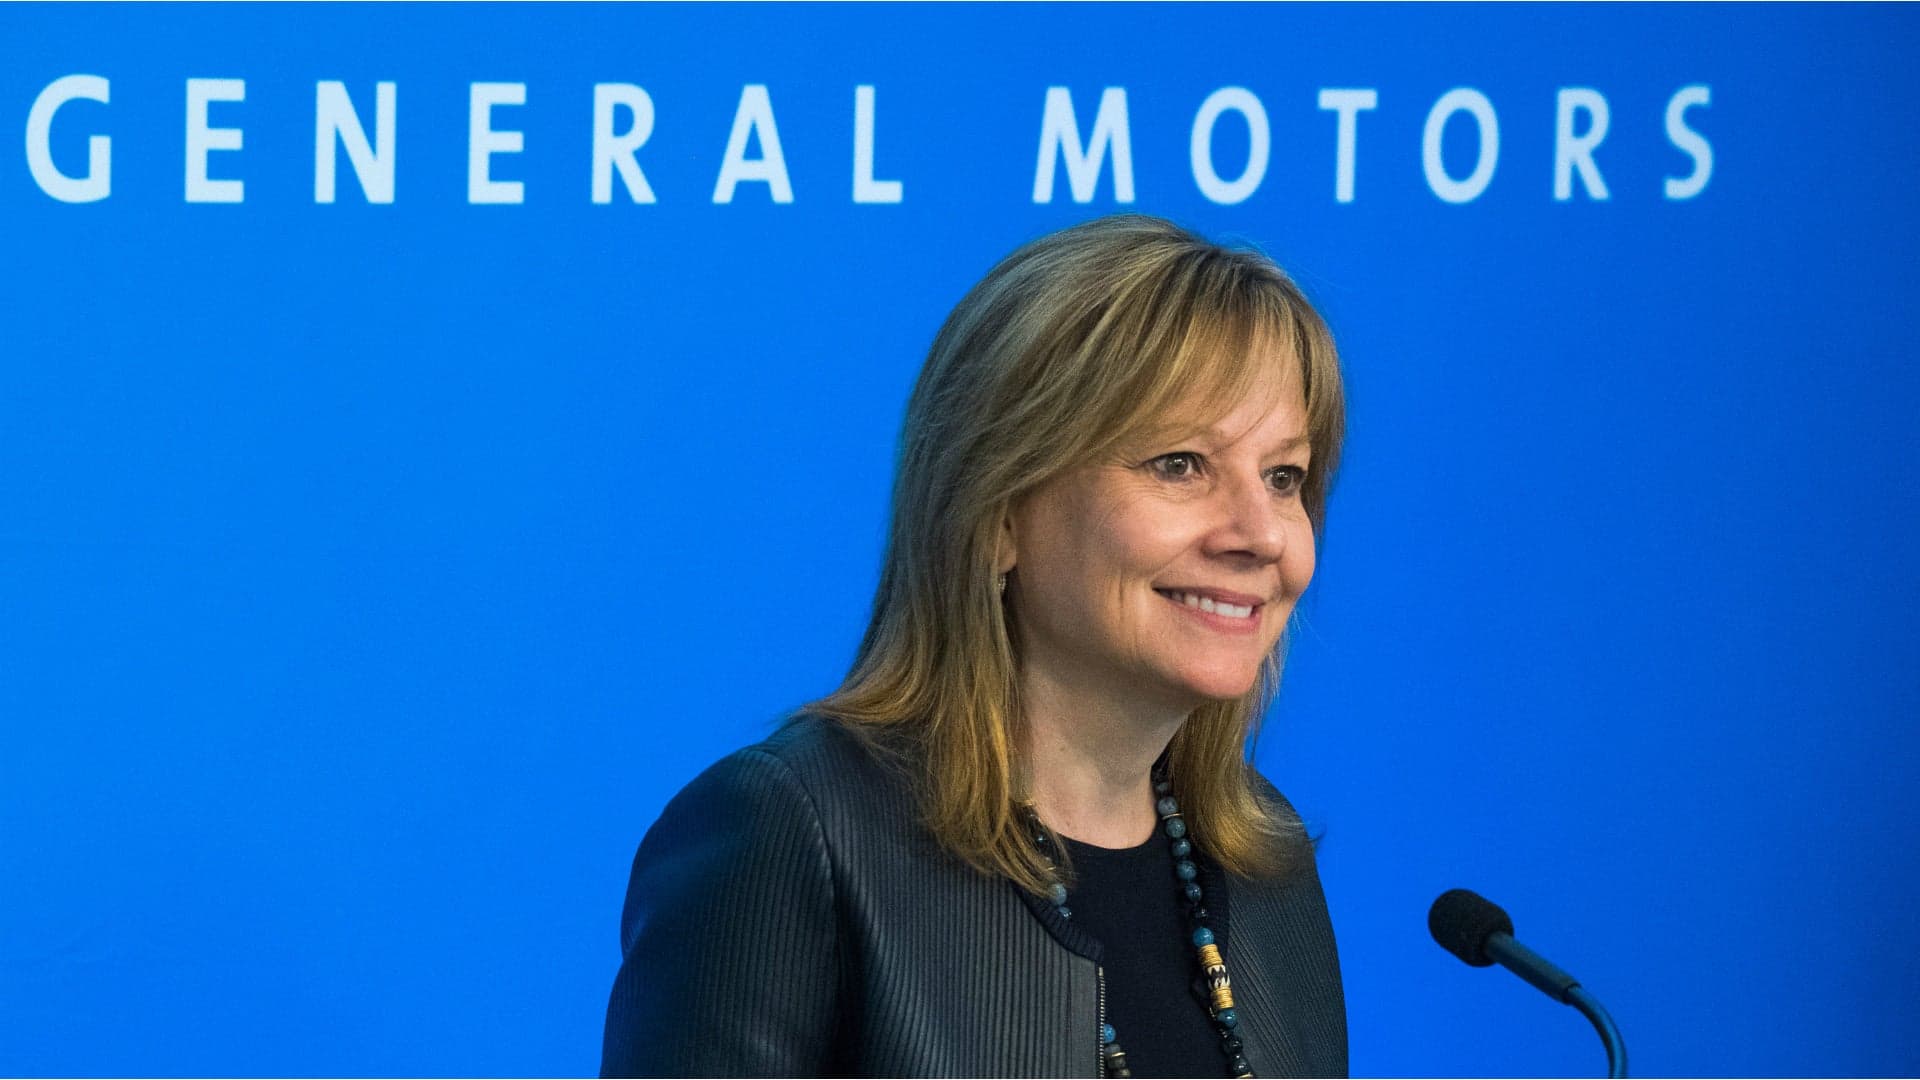 General Motors’ Buyout Program Behind Schedule, Layoffs Threatened: Report